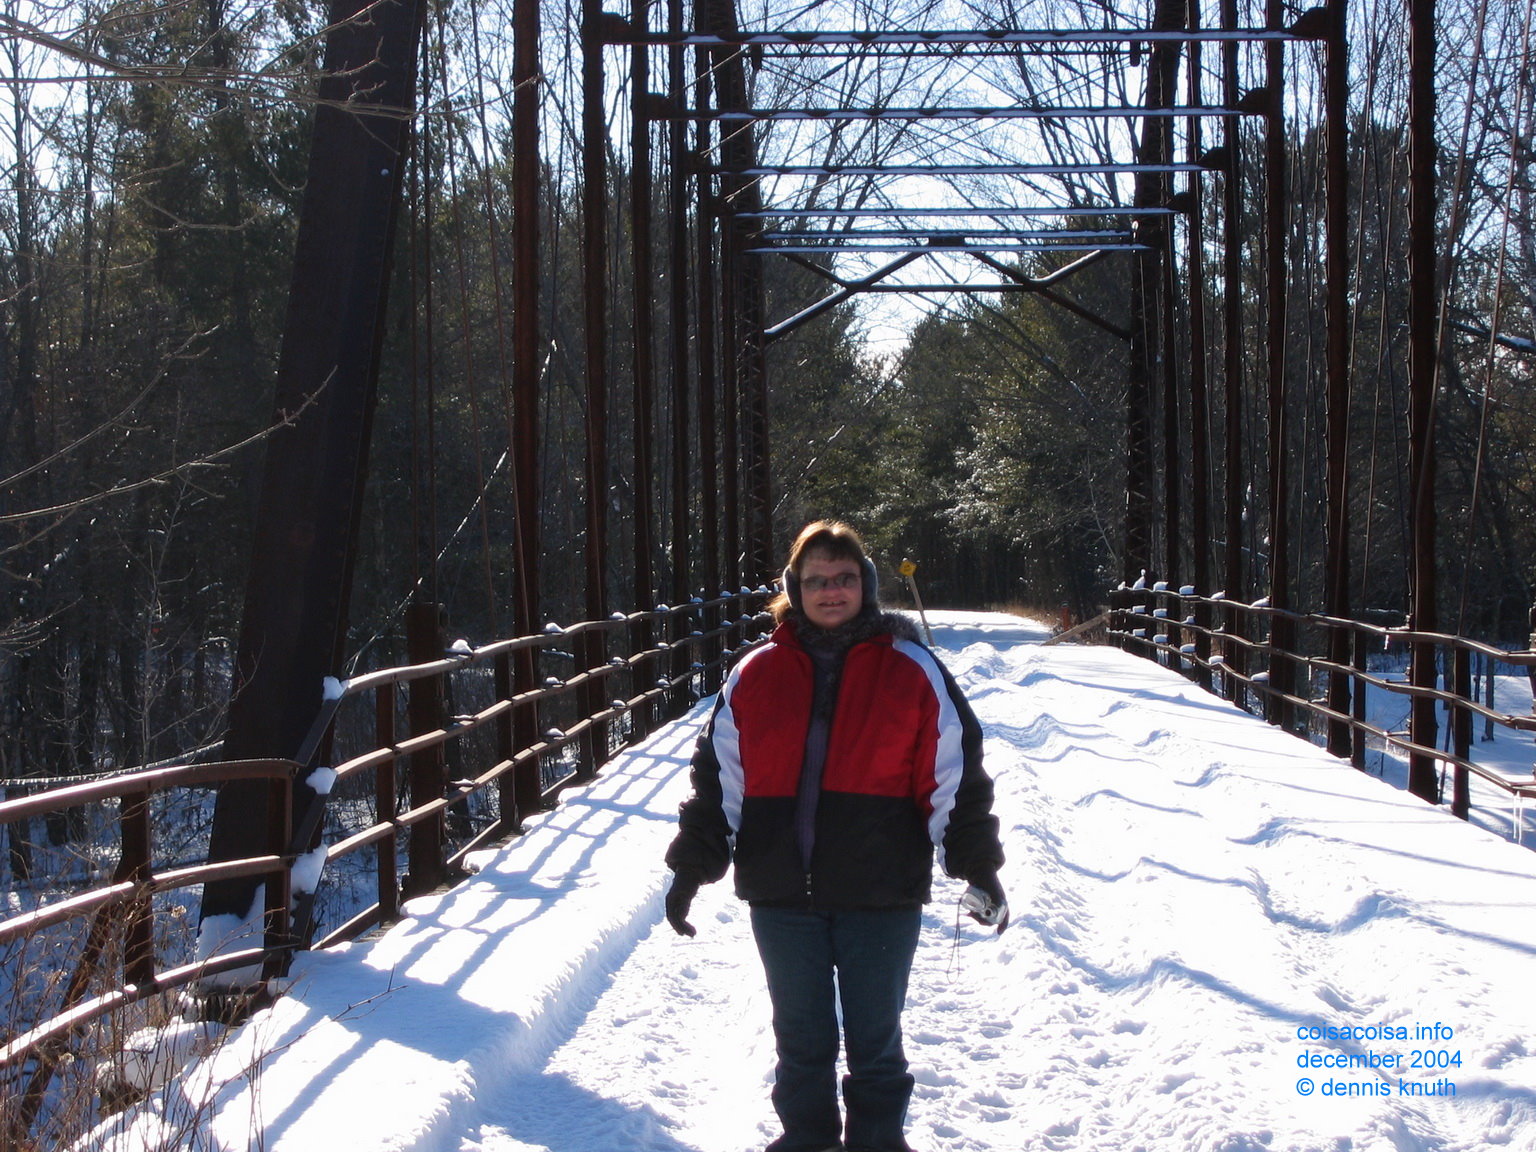 The Green Eyes Bridge in Winter with Sherri